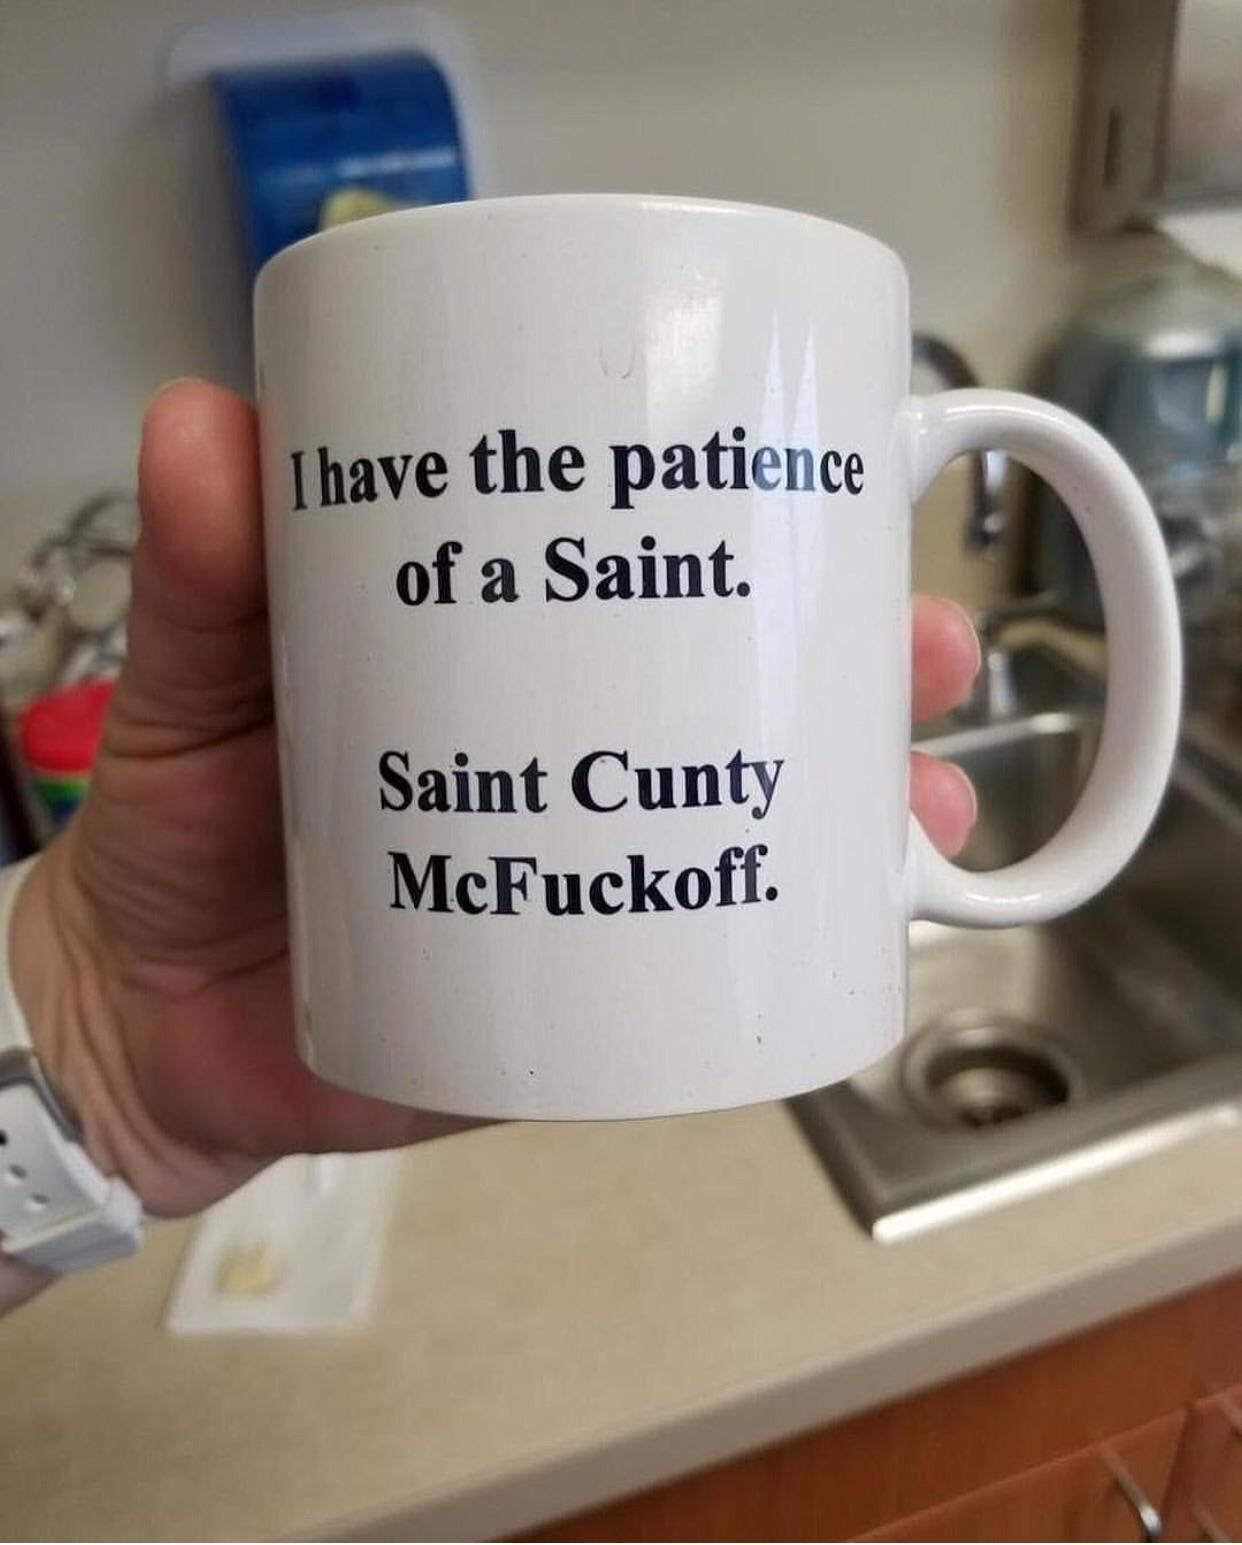 My new coffee mug